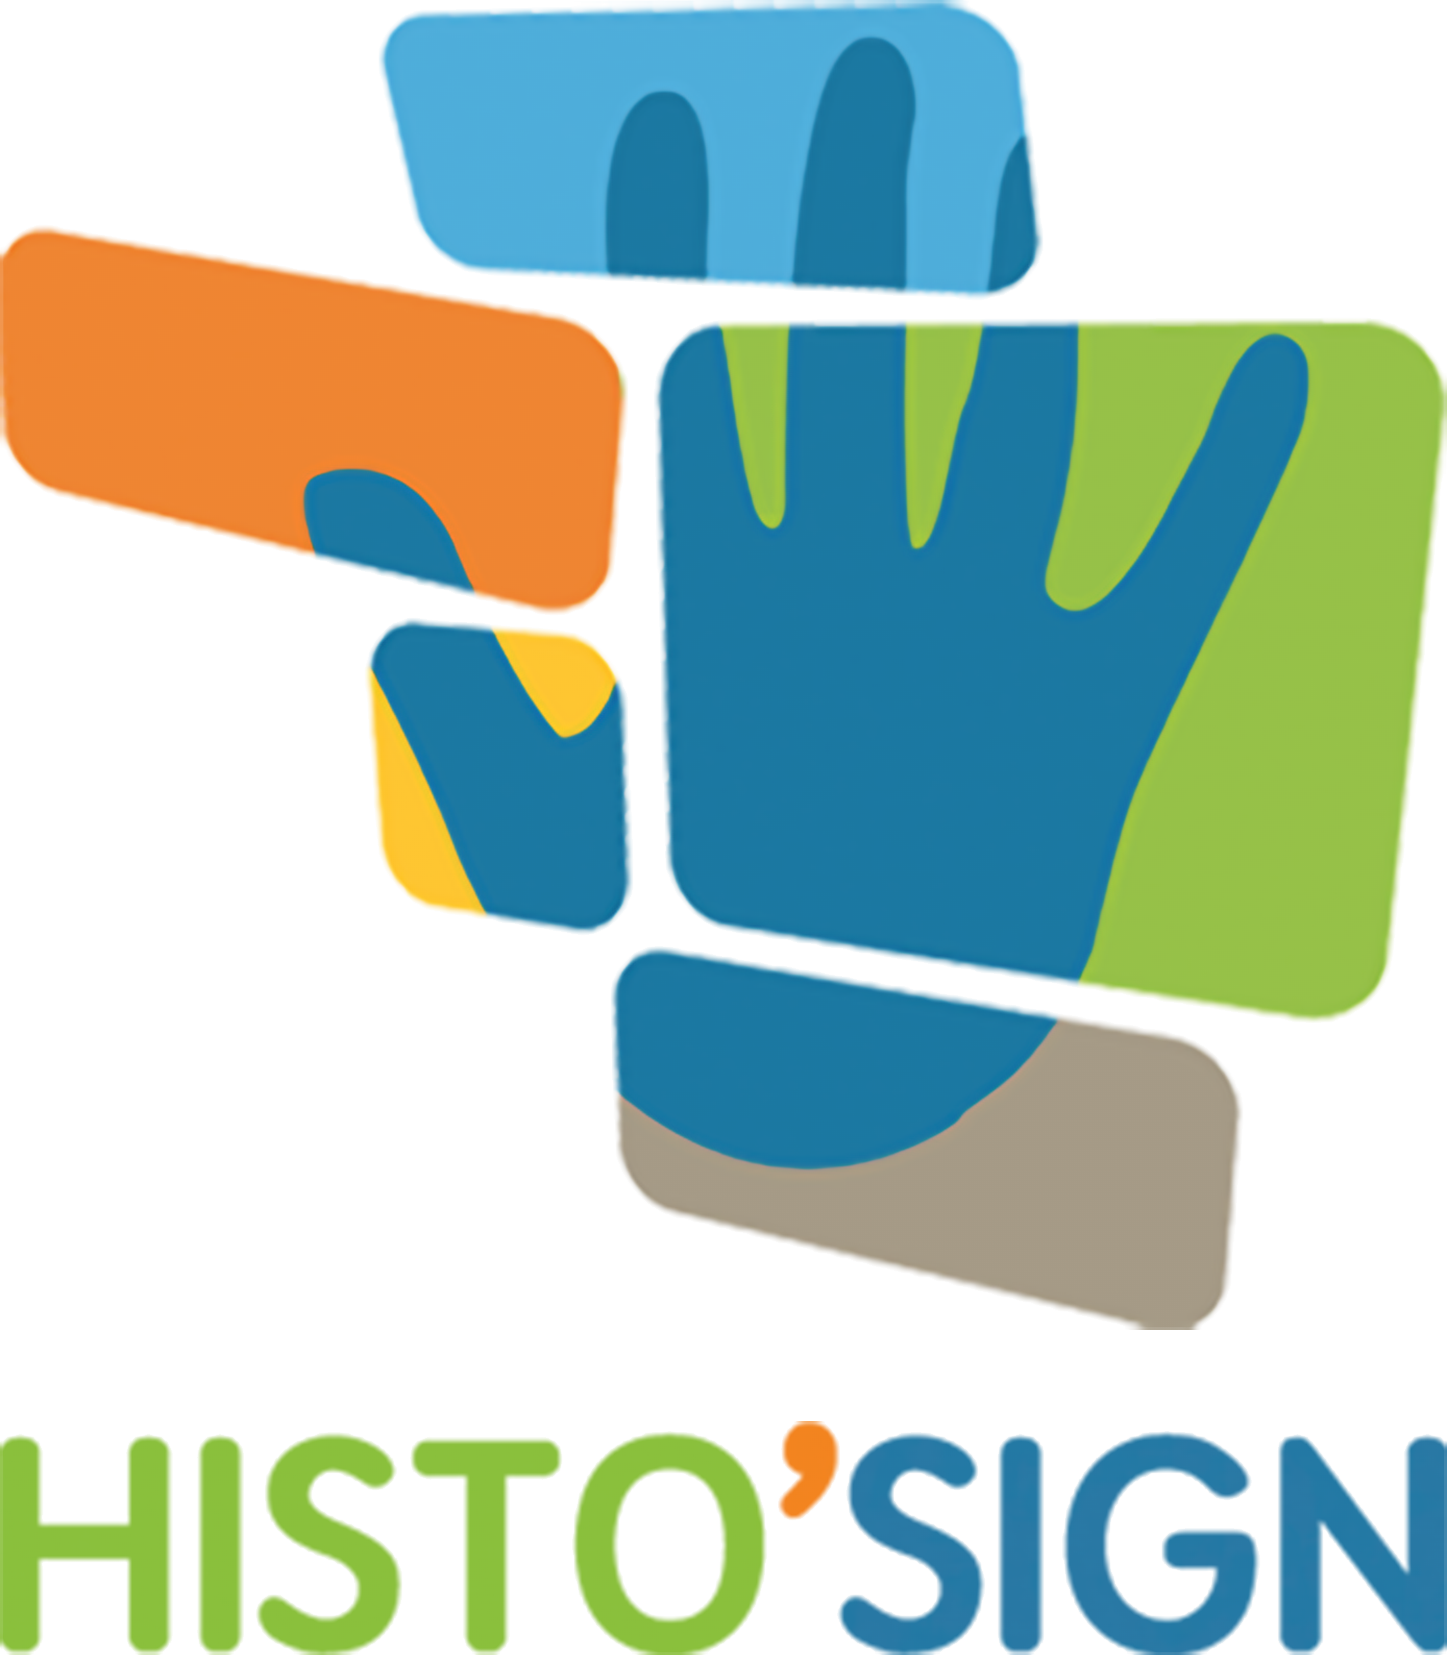 HistoSign